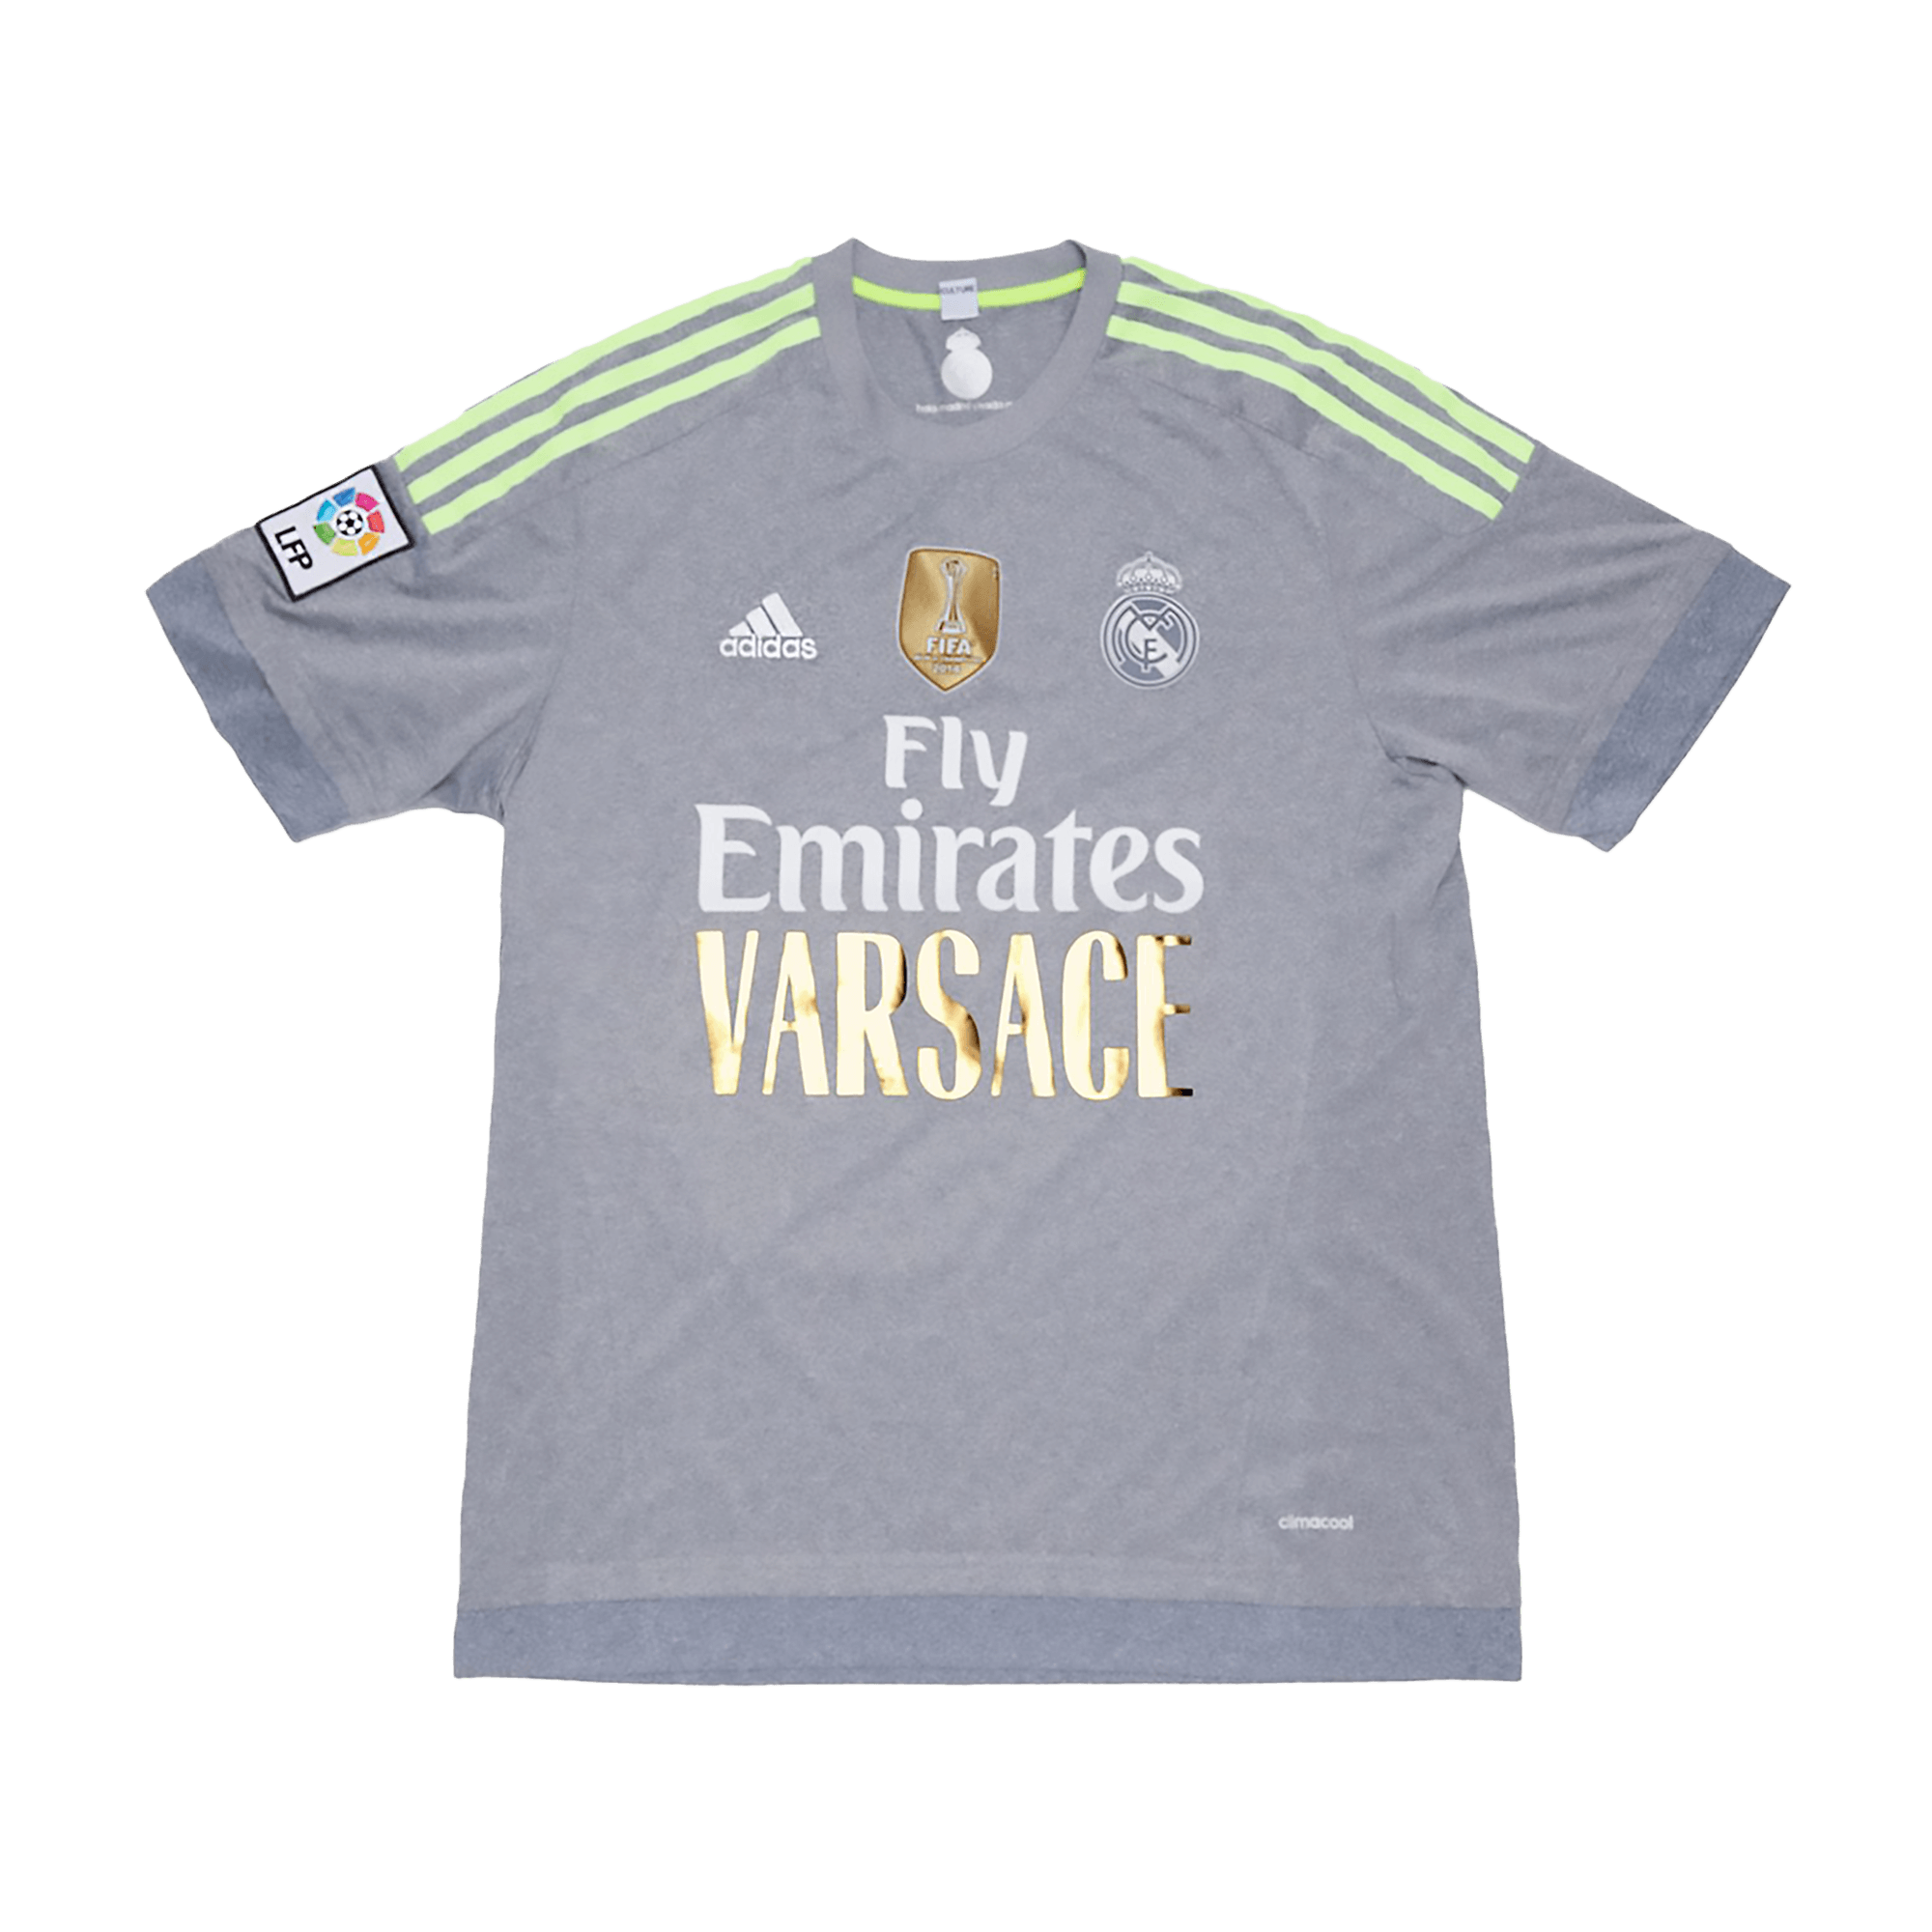 Real Madrid 2015/2016 Varsace